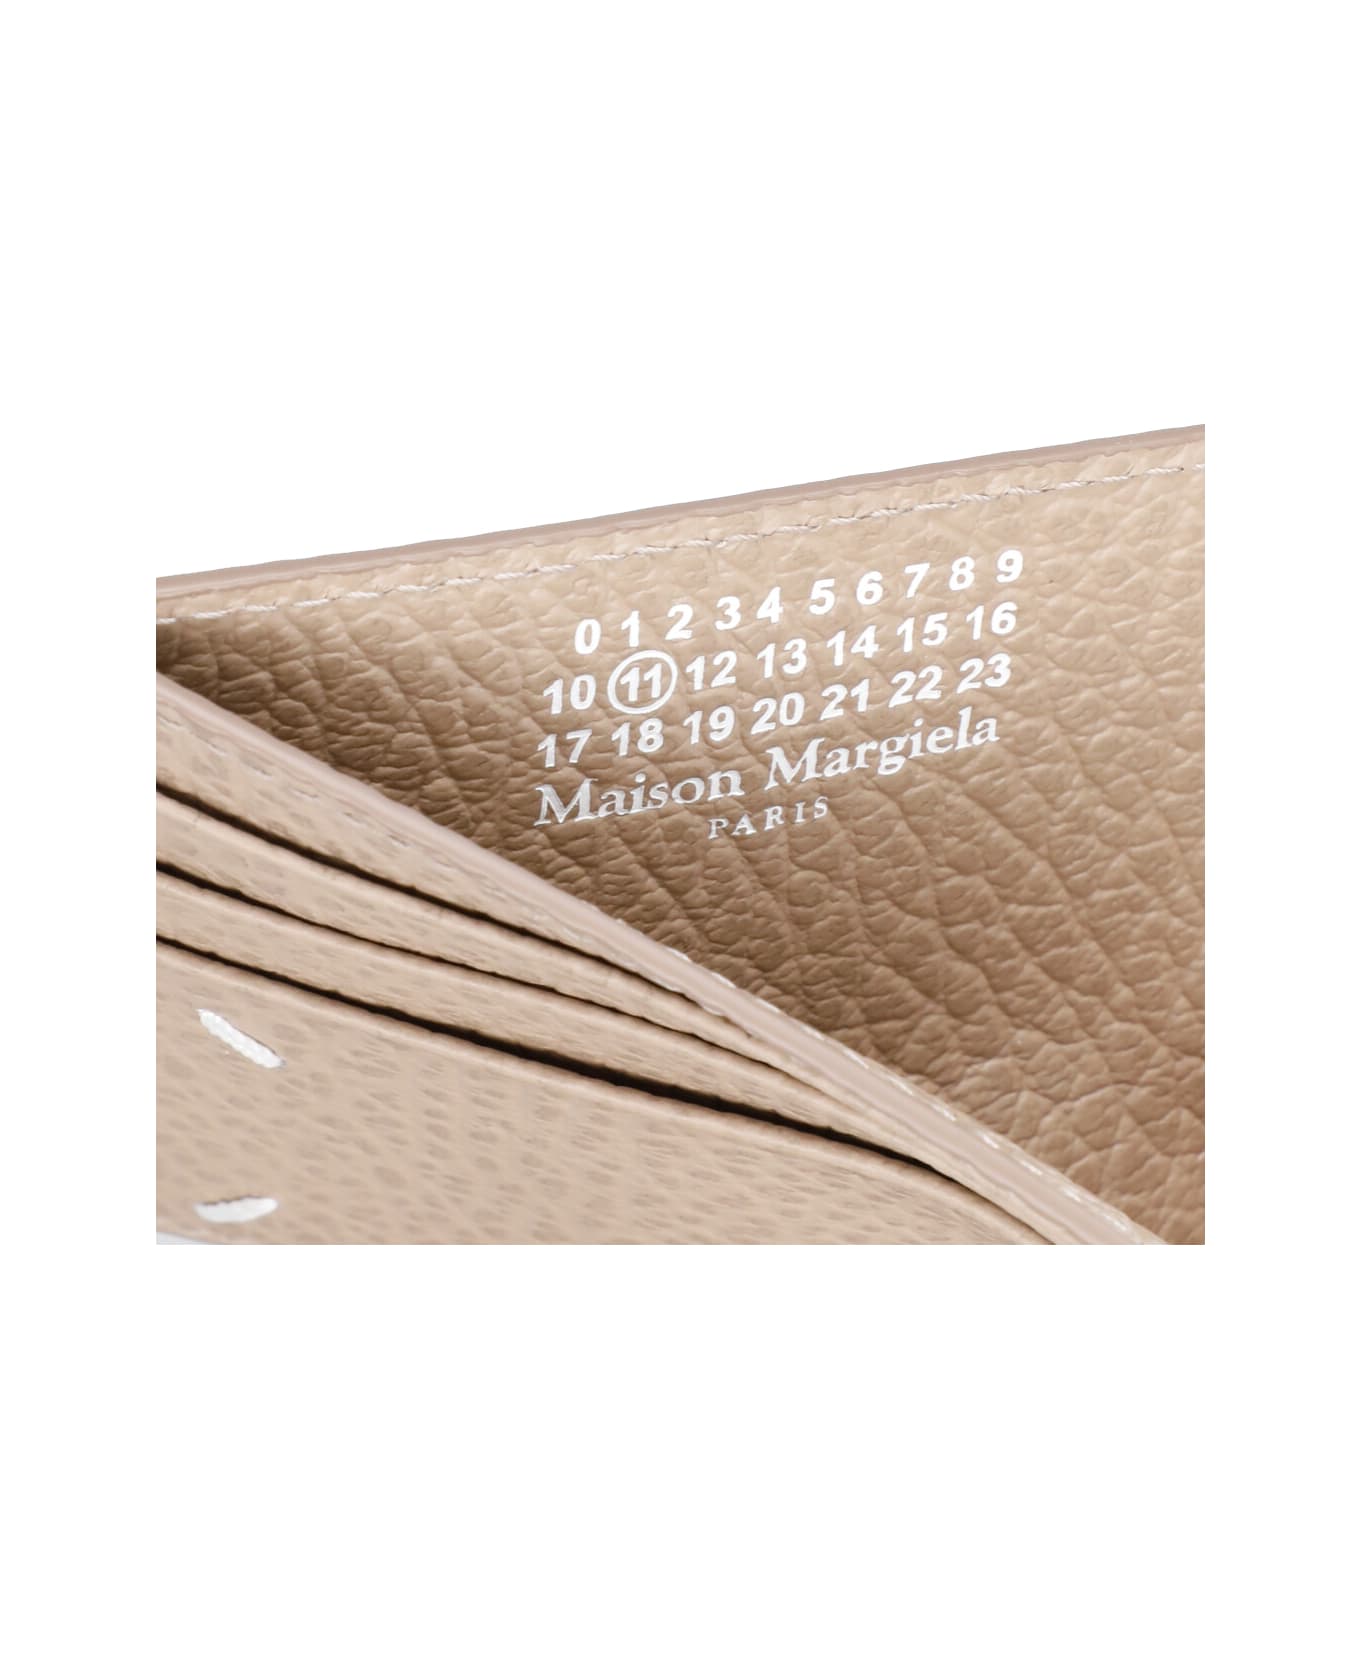 Maison Margiela Four Stitches Card Holder - Biche 財布